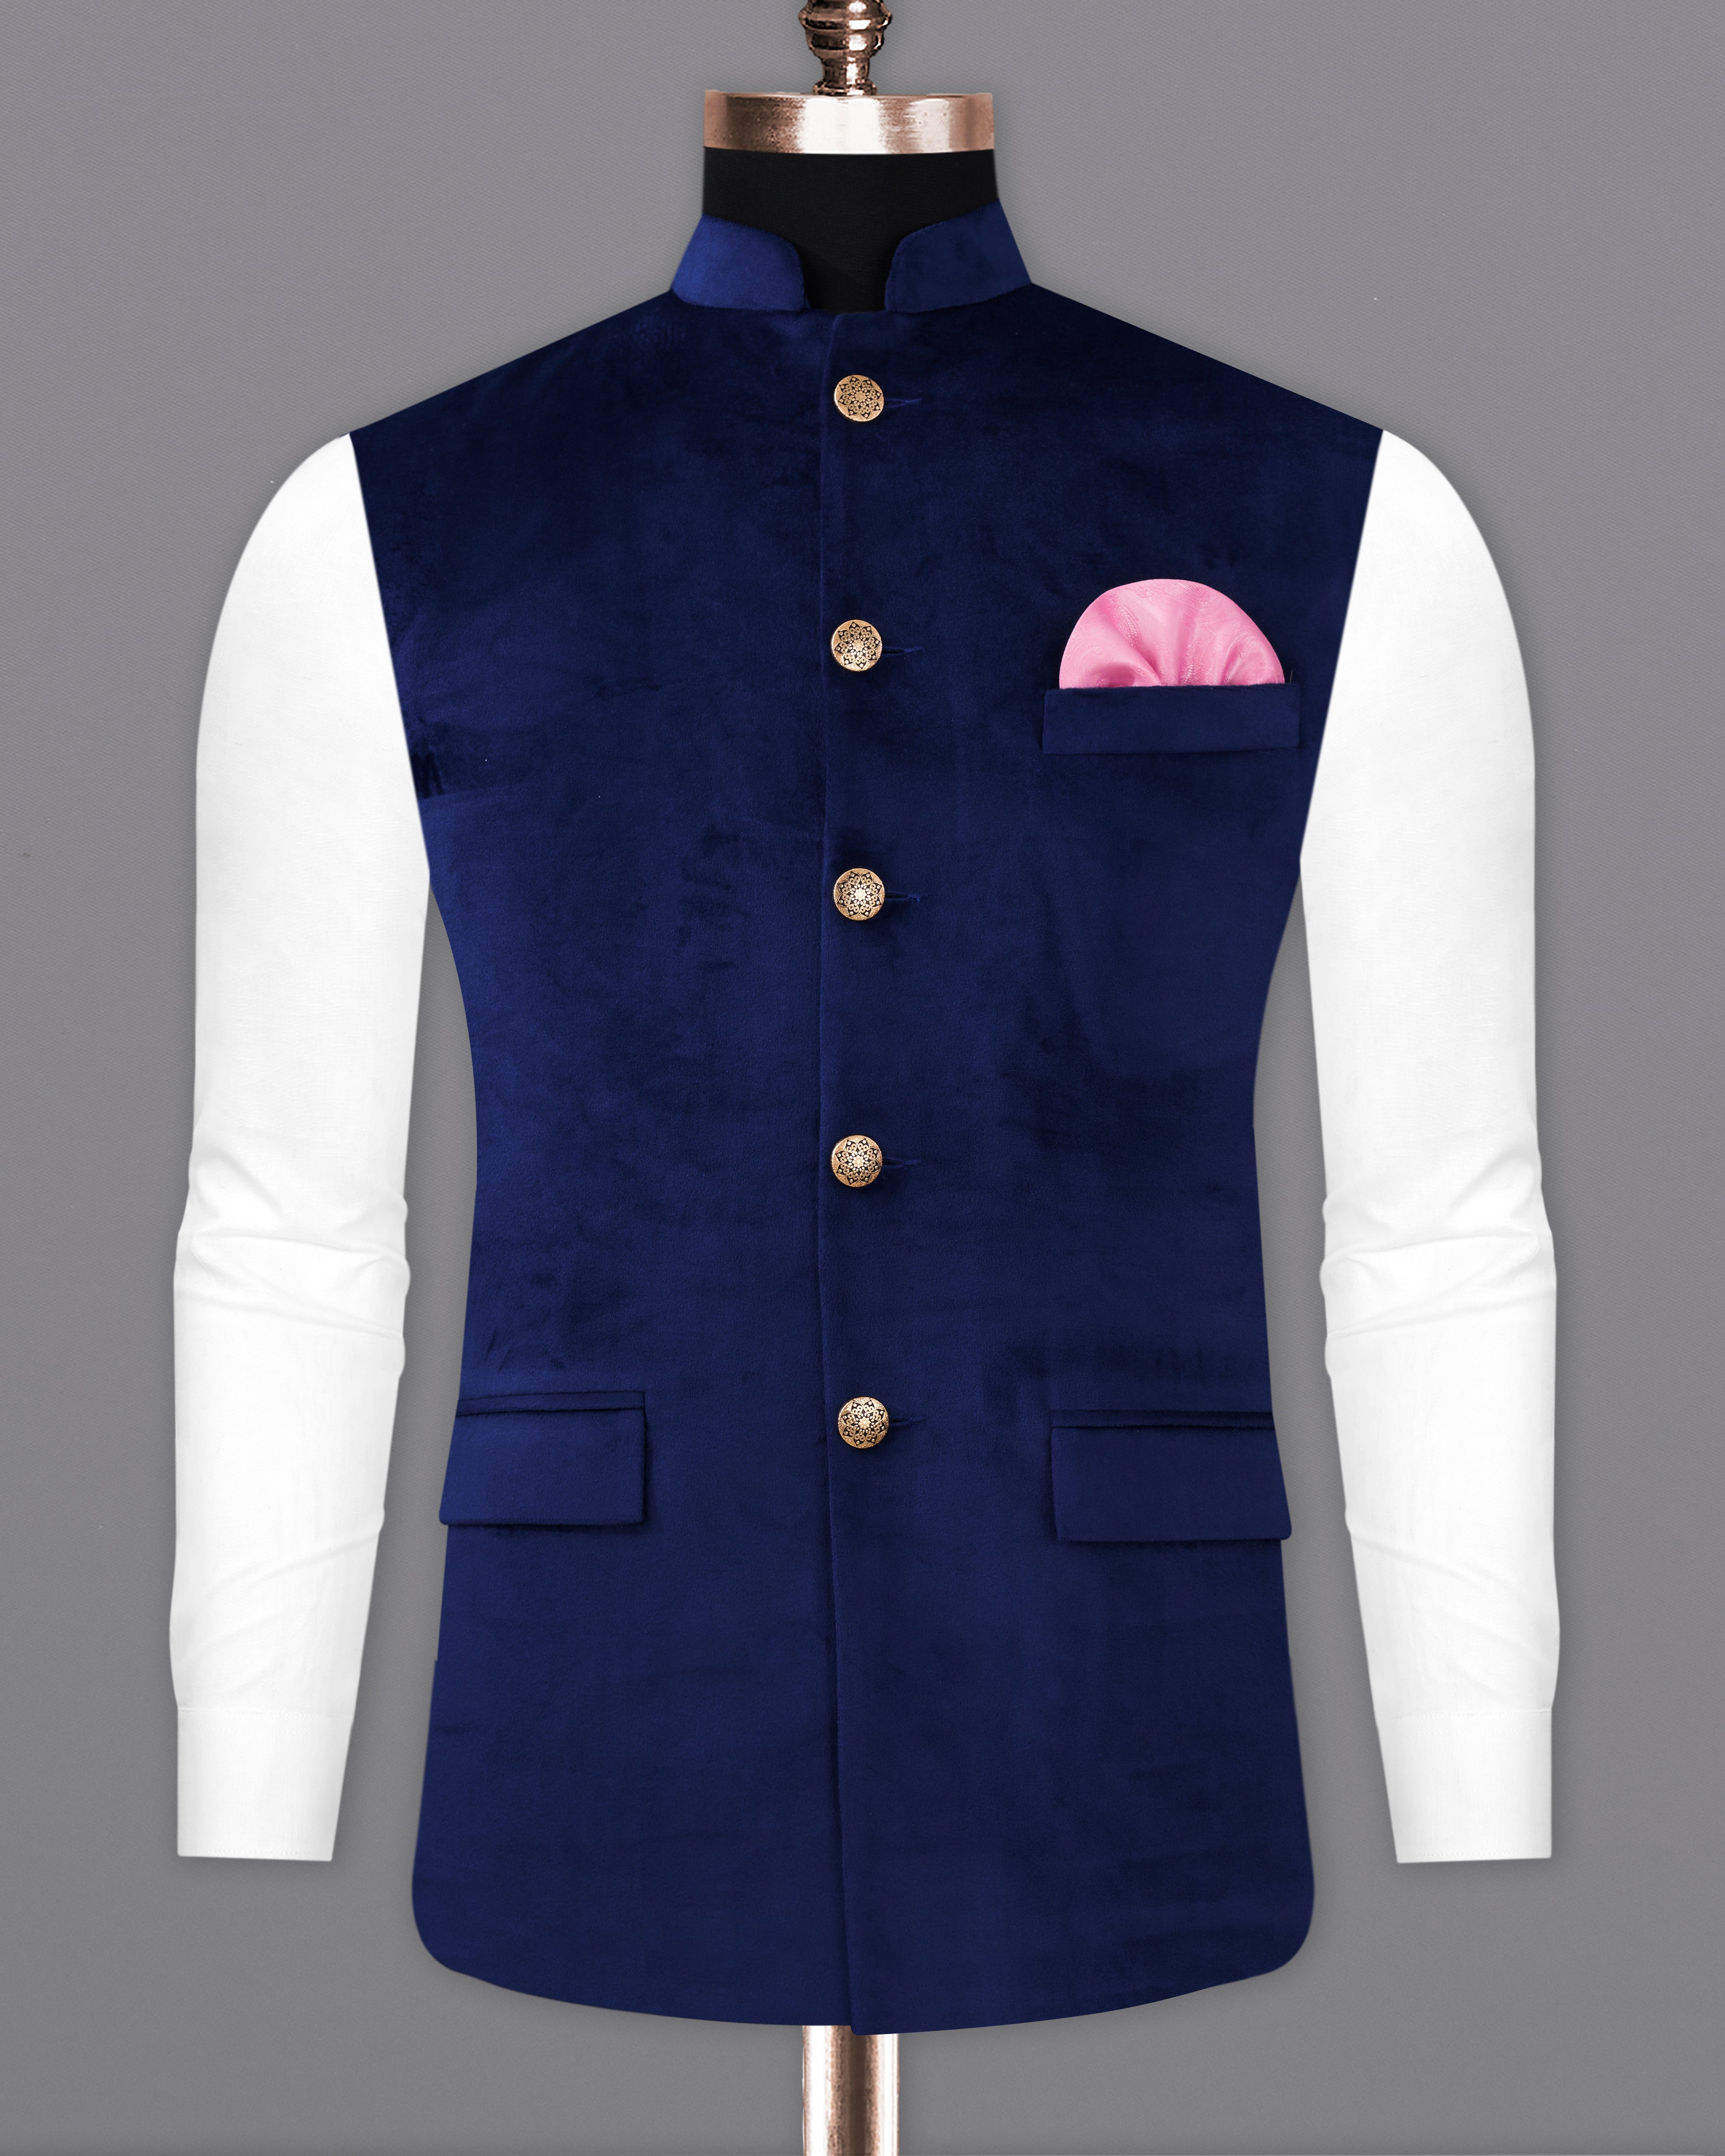 How should i wear Nehru jacket? - Quora